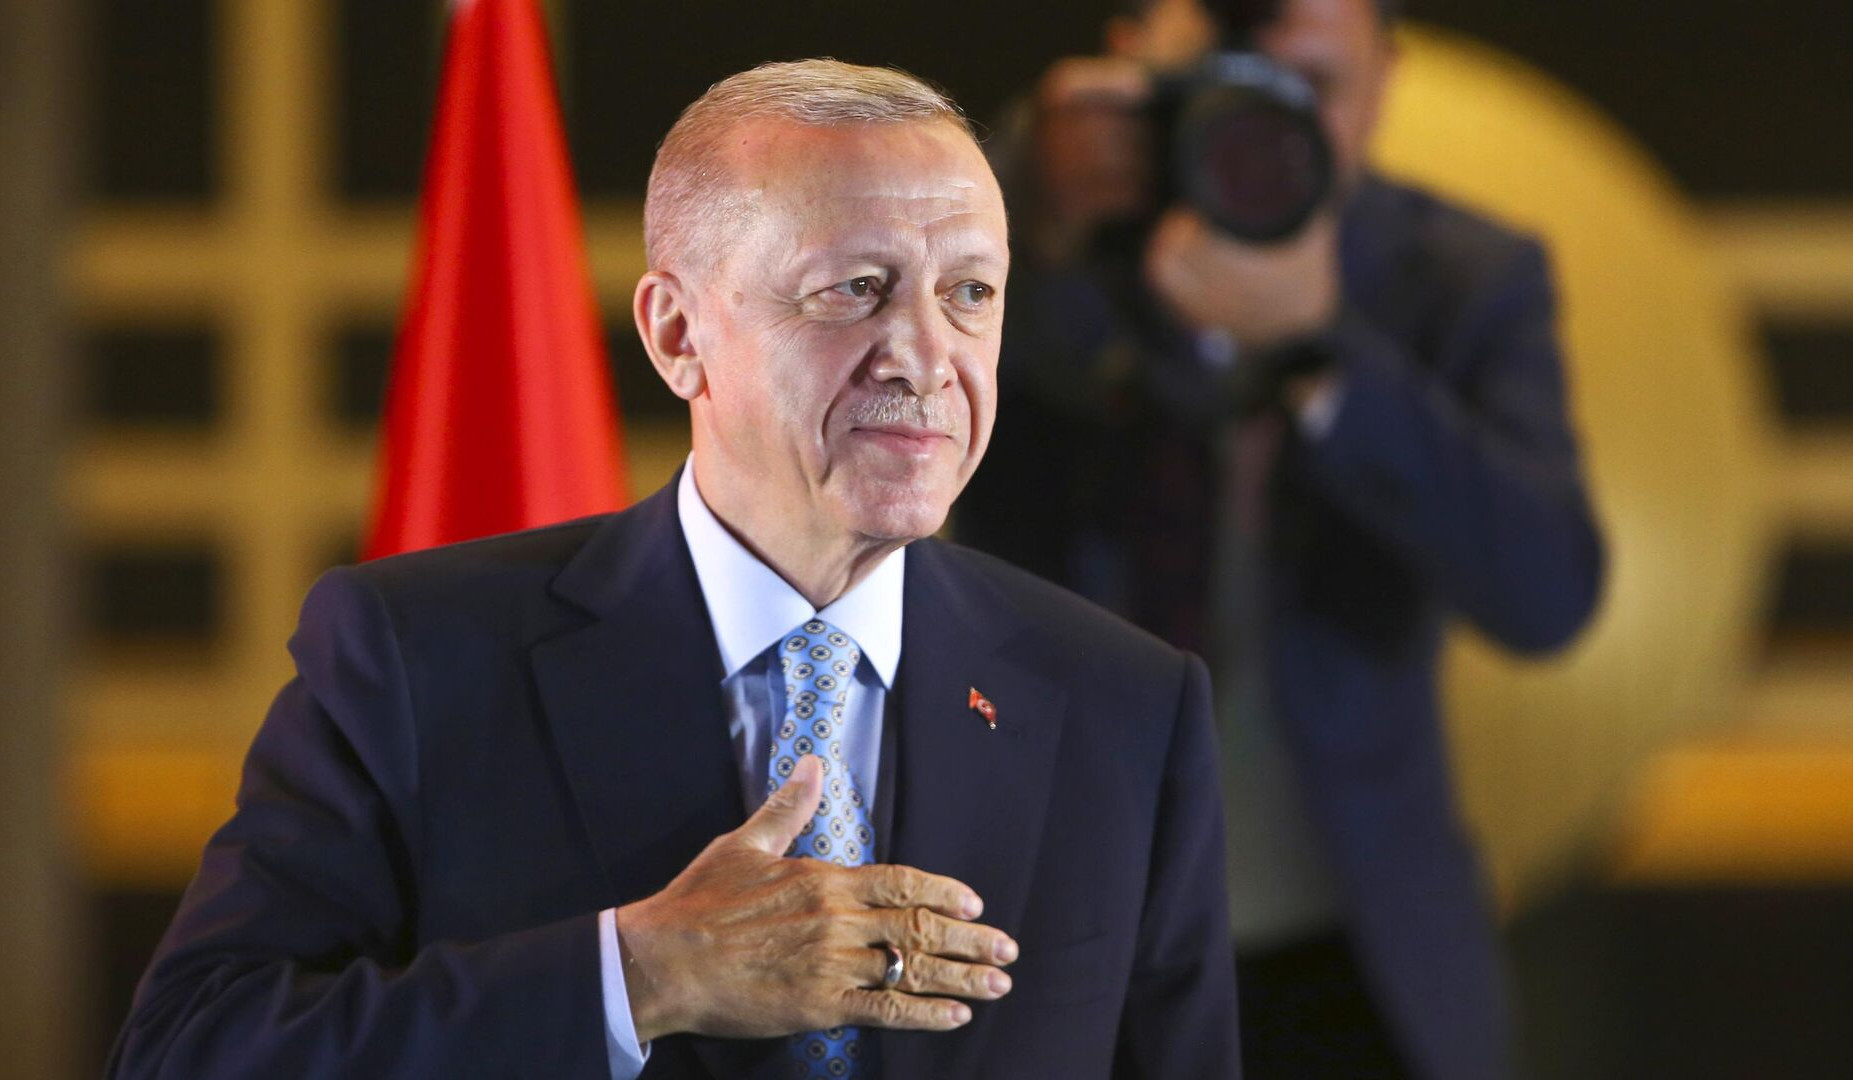 Turkey's Erdogan sworn in for new term as president